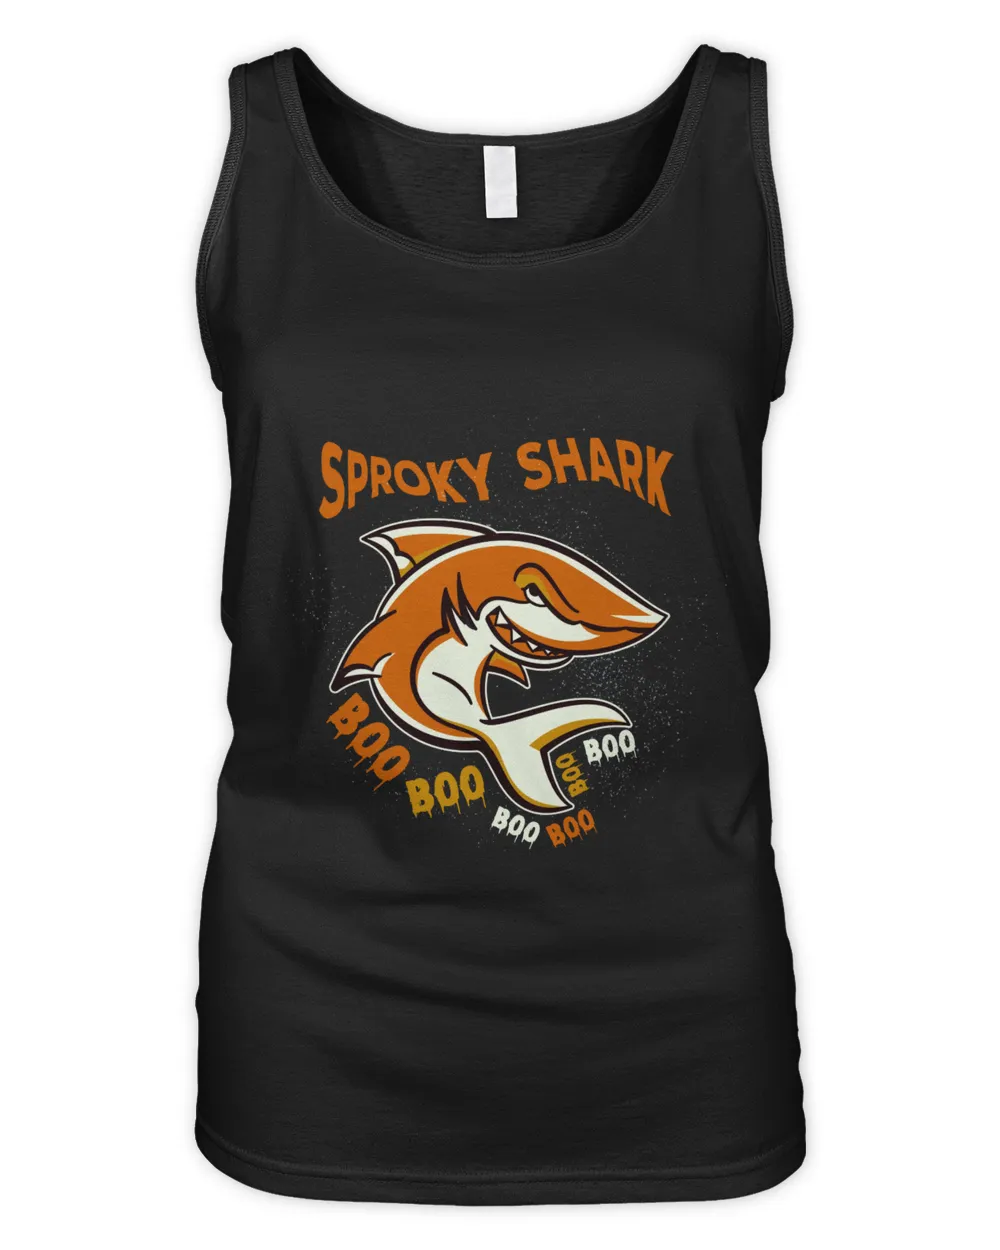 Spooky shark boo boo boo boo V-Neck T-Shirt